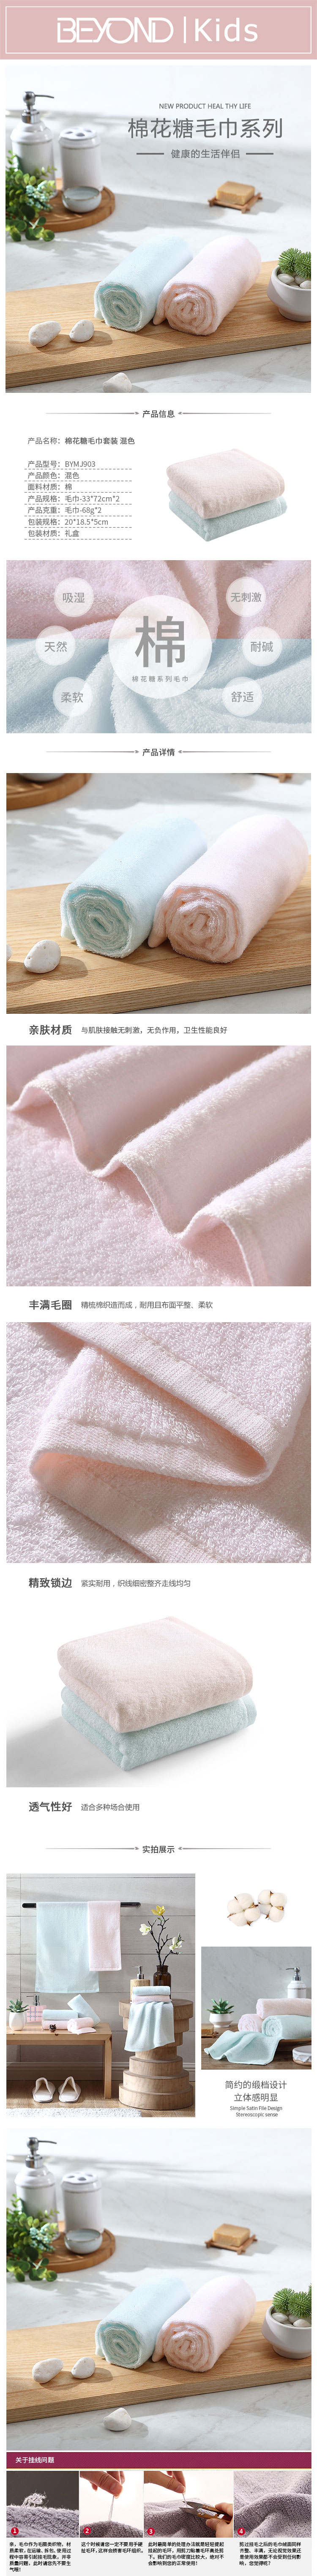 750px-BYMJ903棉花糖毛巾套装-混色.jpg